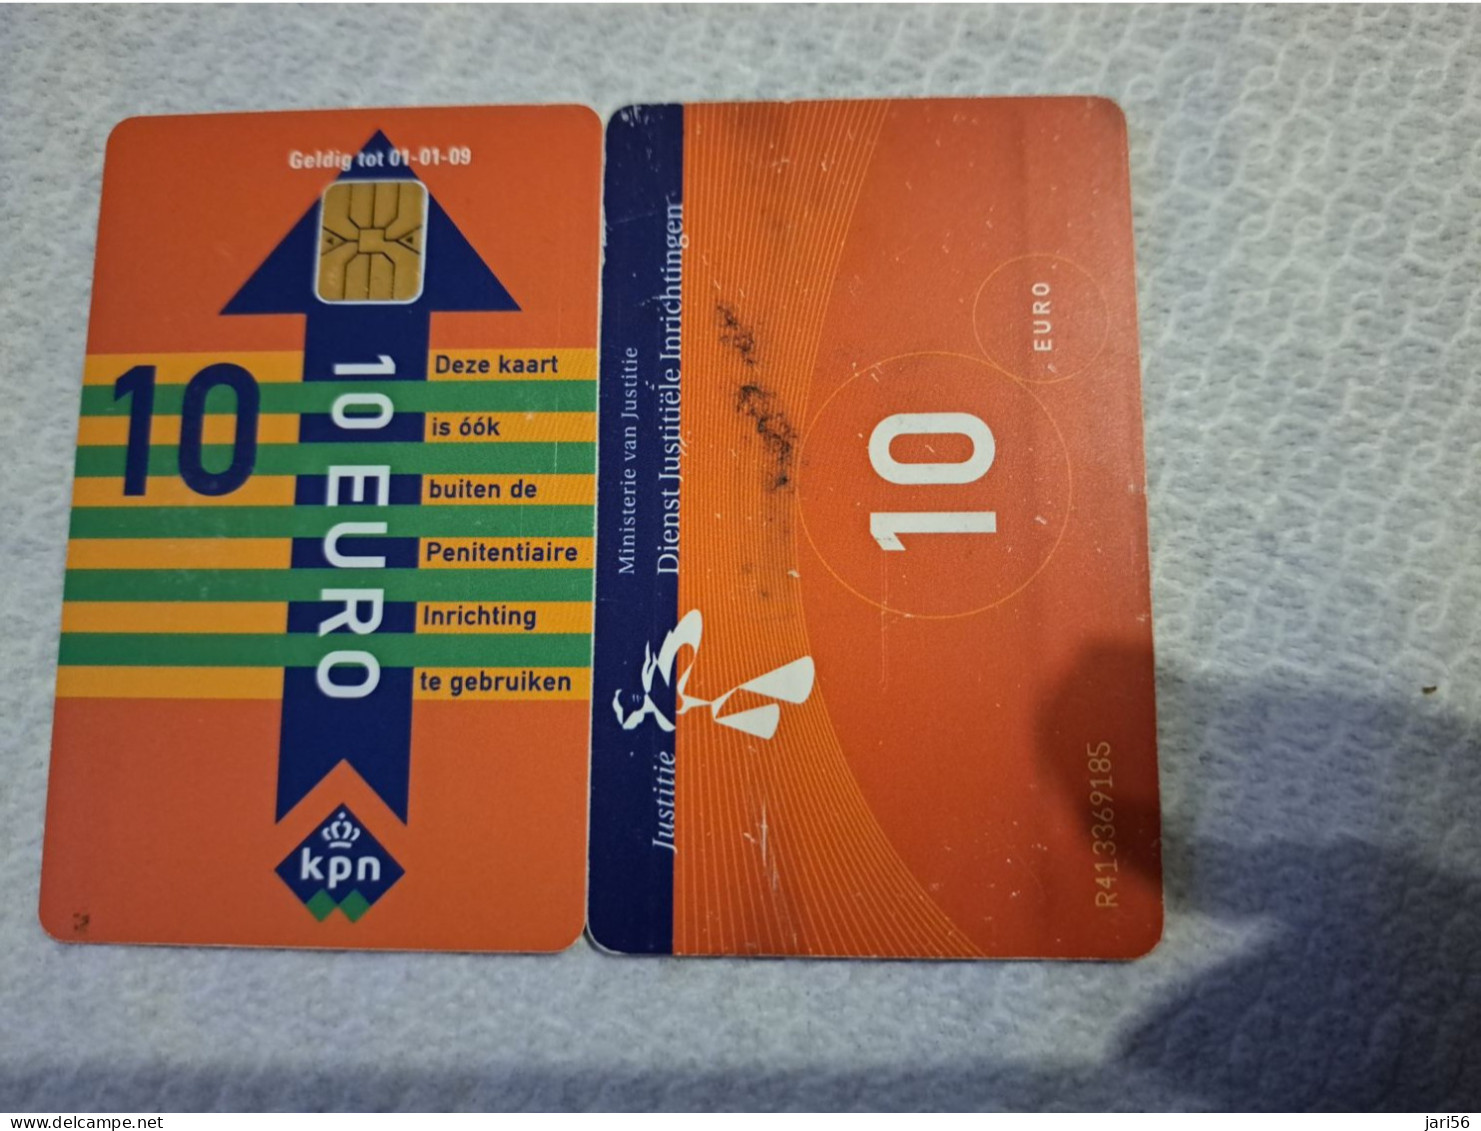 NETHERLANDS   € 10,-   / USED  / DATE  01-01-09  JUSTITIE/PRISON CARD  CHIP CARD/ USED   ** 16162** - [3] Handy-, Prepaid- U. Aufladkarten